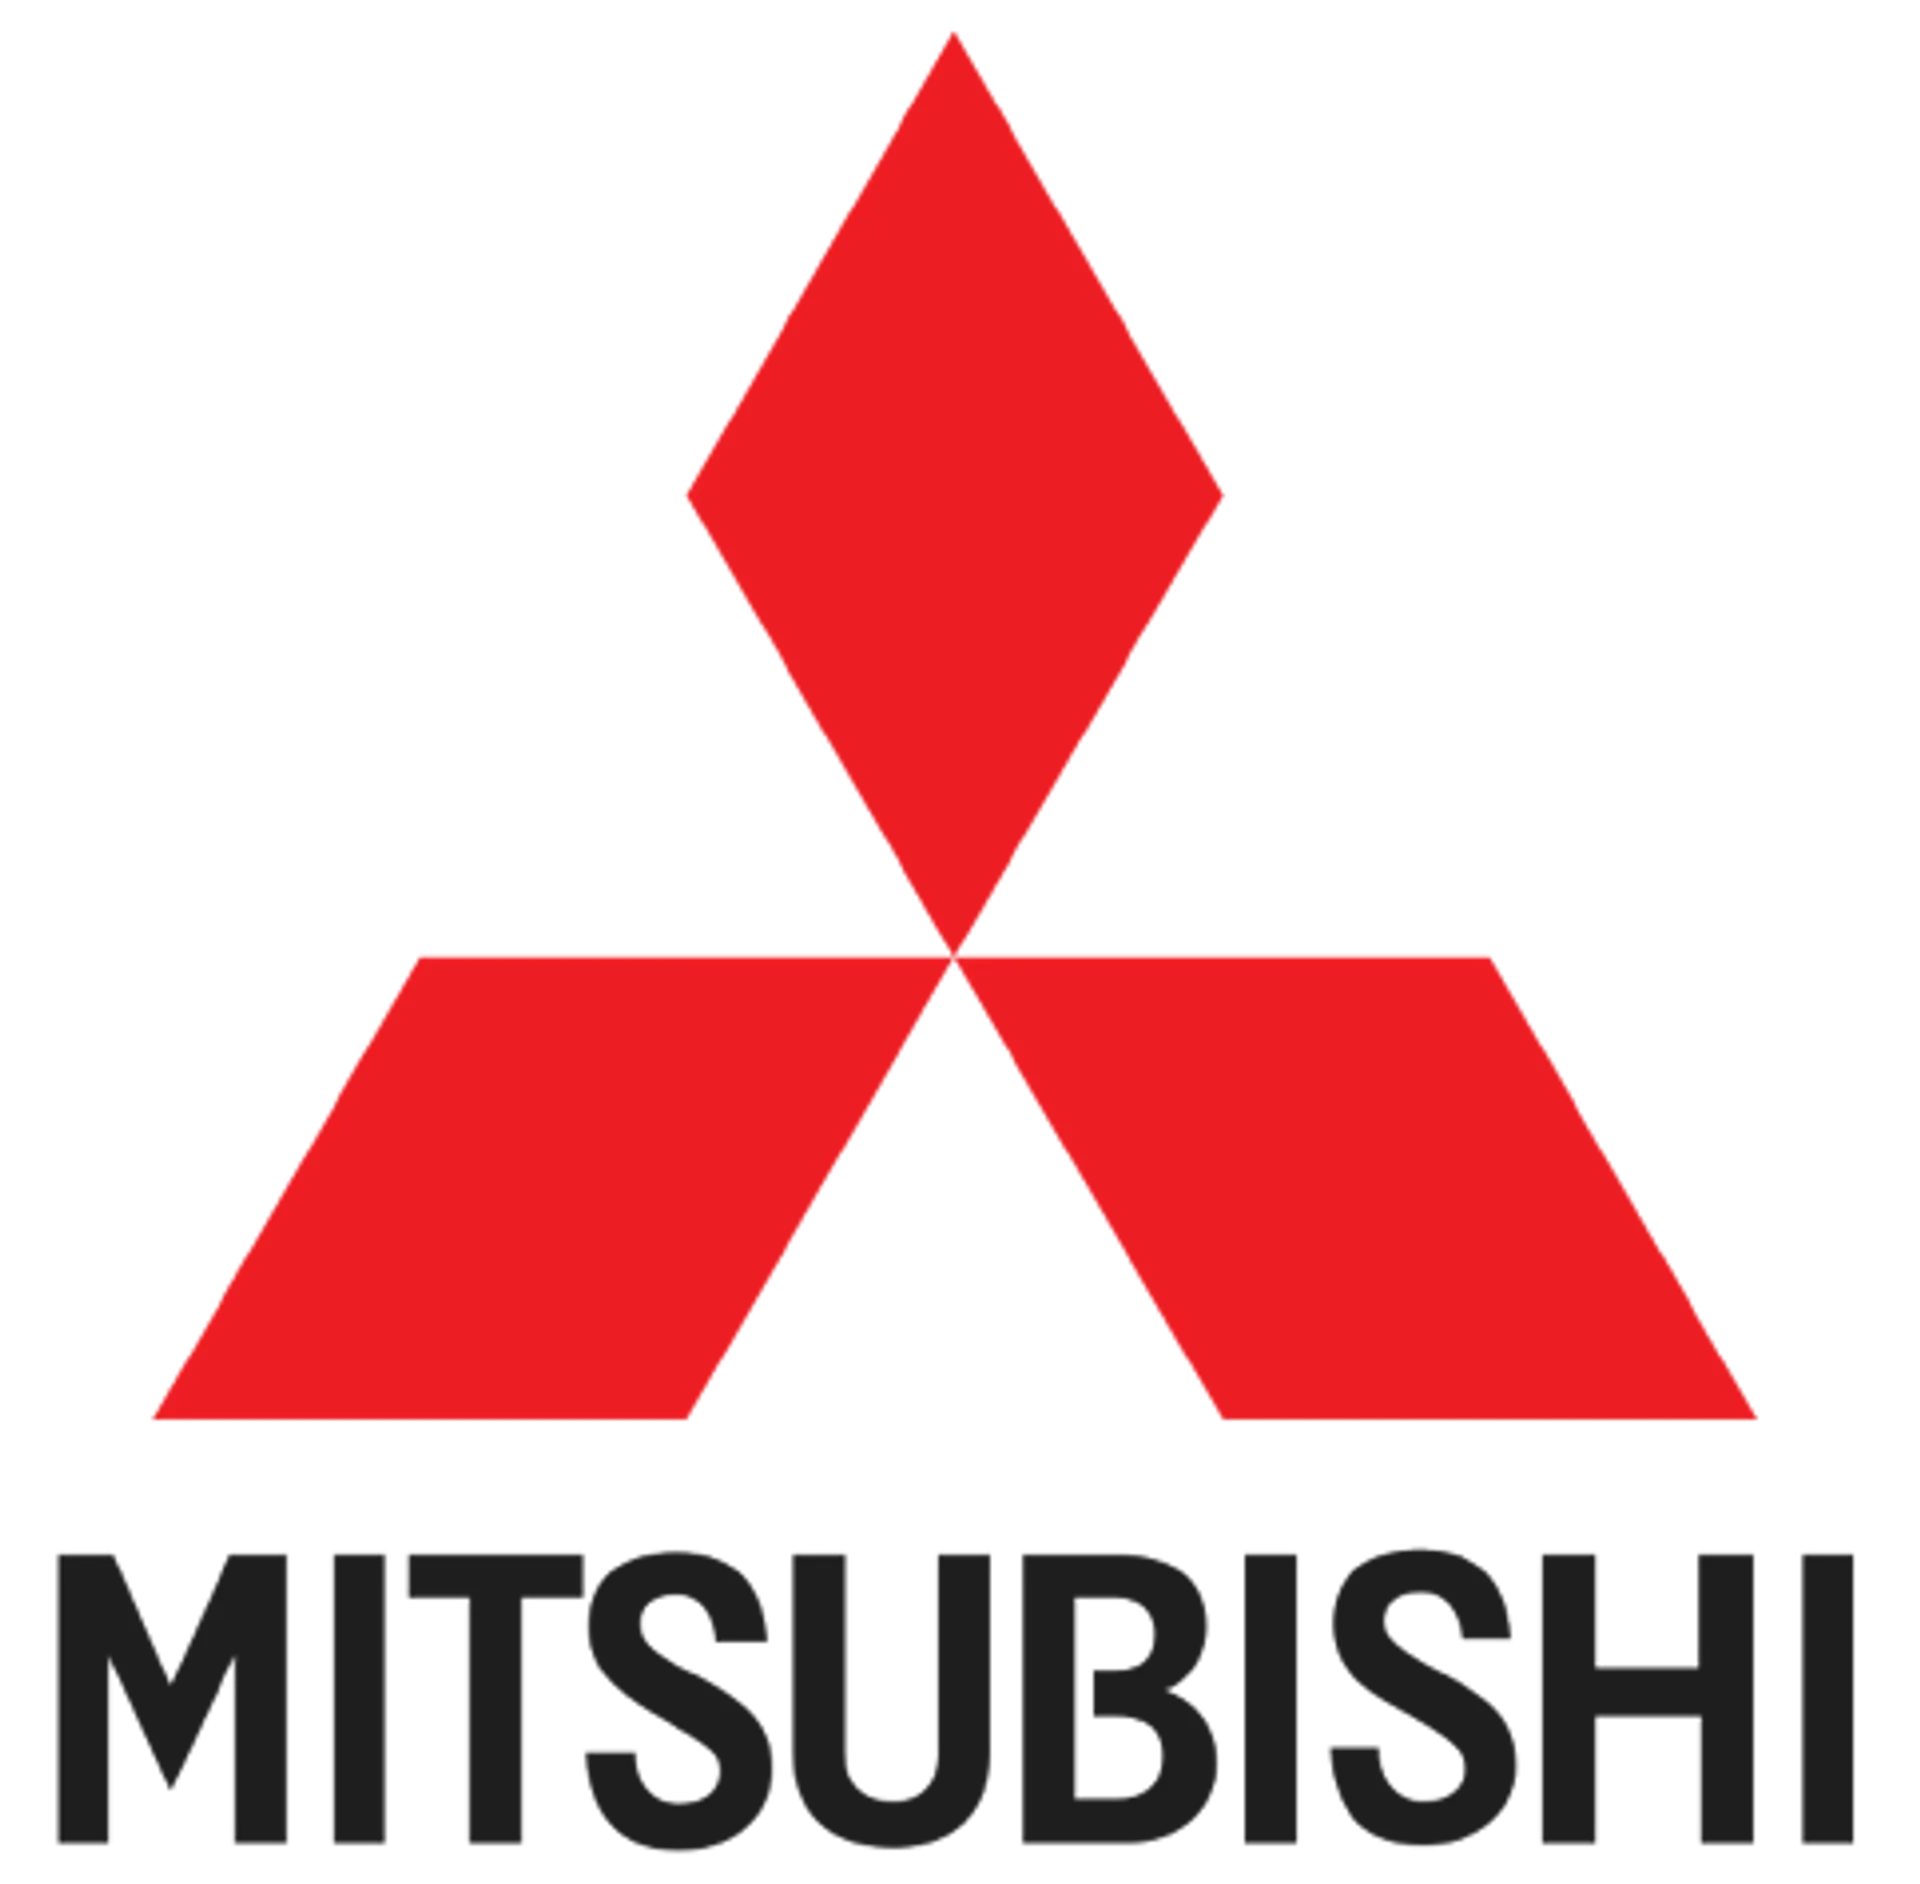 MITSUBISHI logo. Current weekly ad